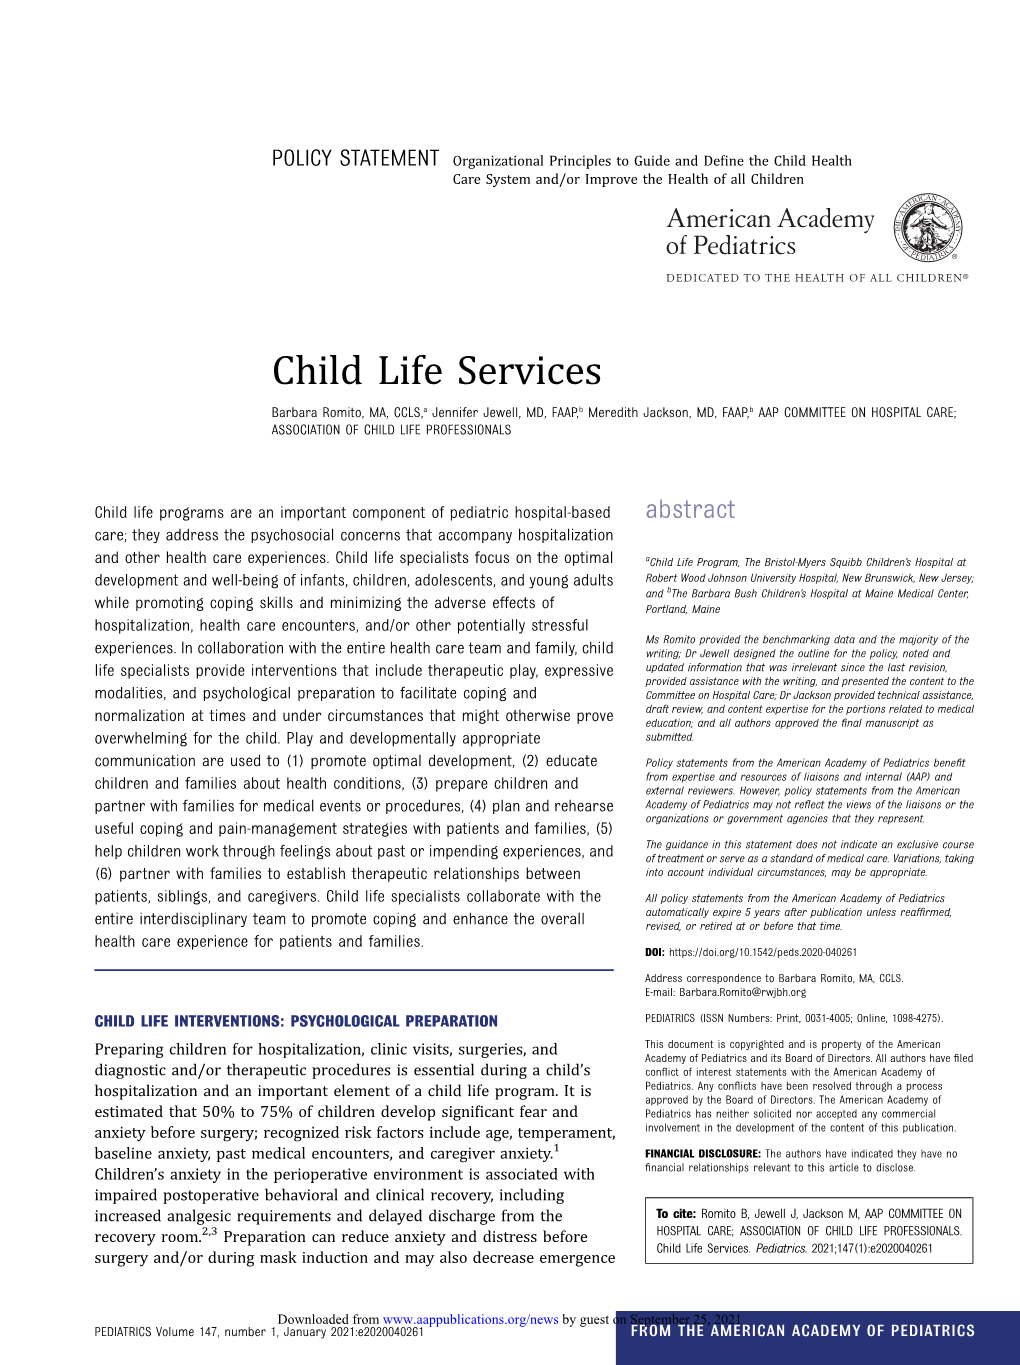 Child Life Services